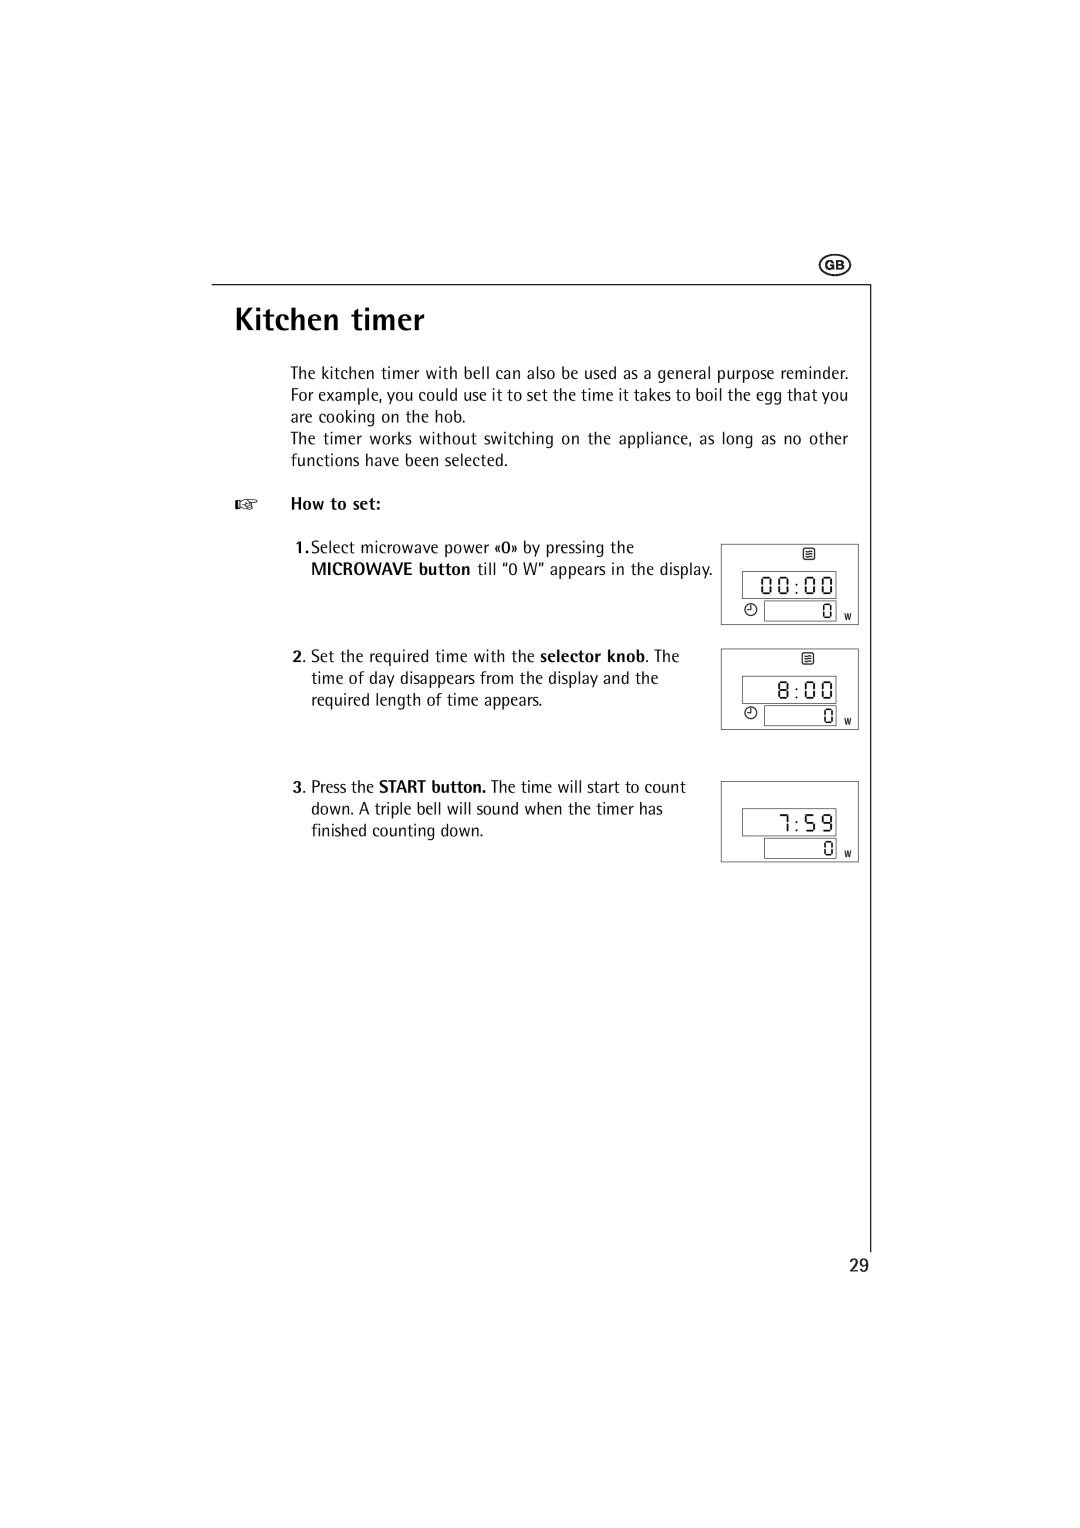 AEG MCC 663 instruction manual Kitchen timer, How to set 